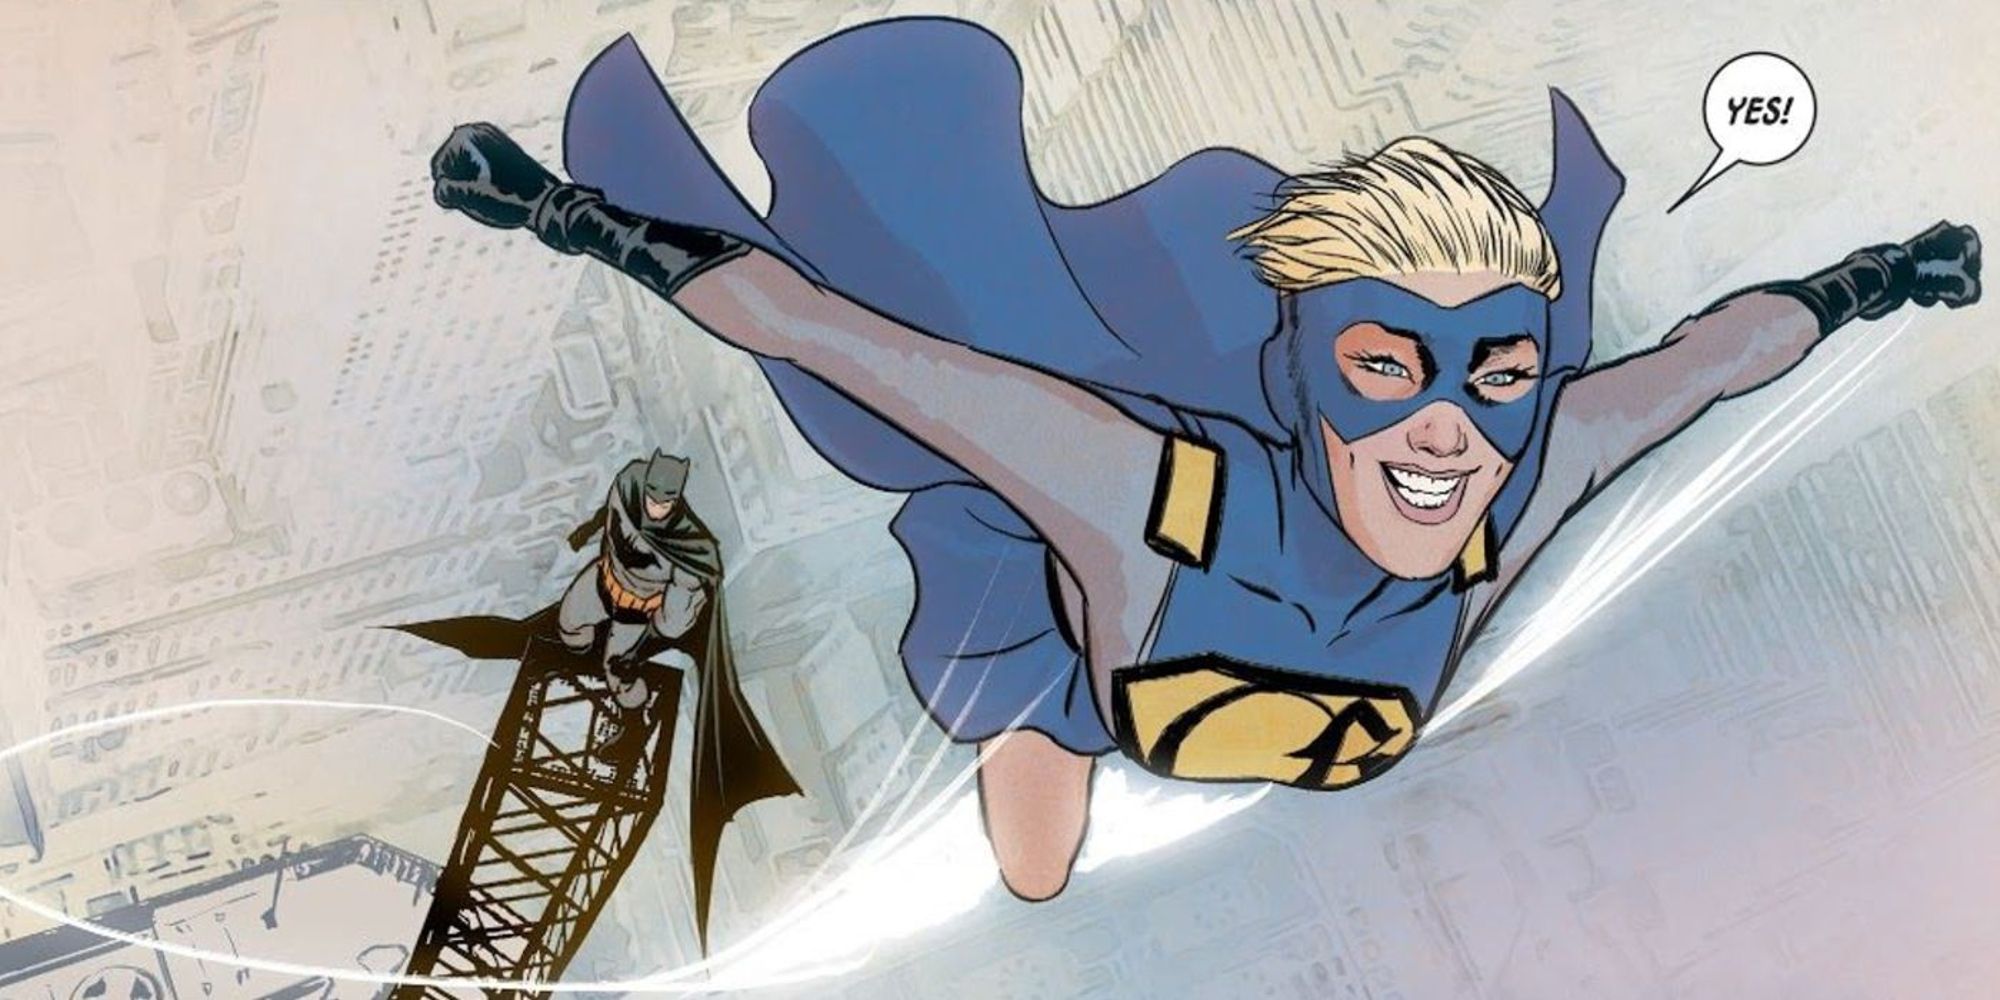 Batman smiling at Gotham Girl flying away in DC comics